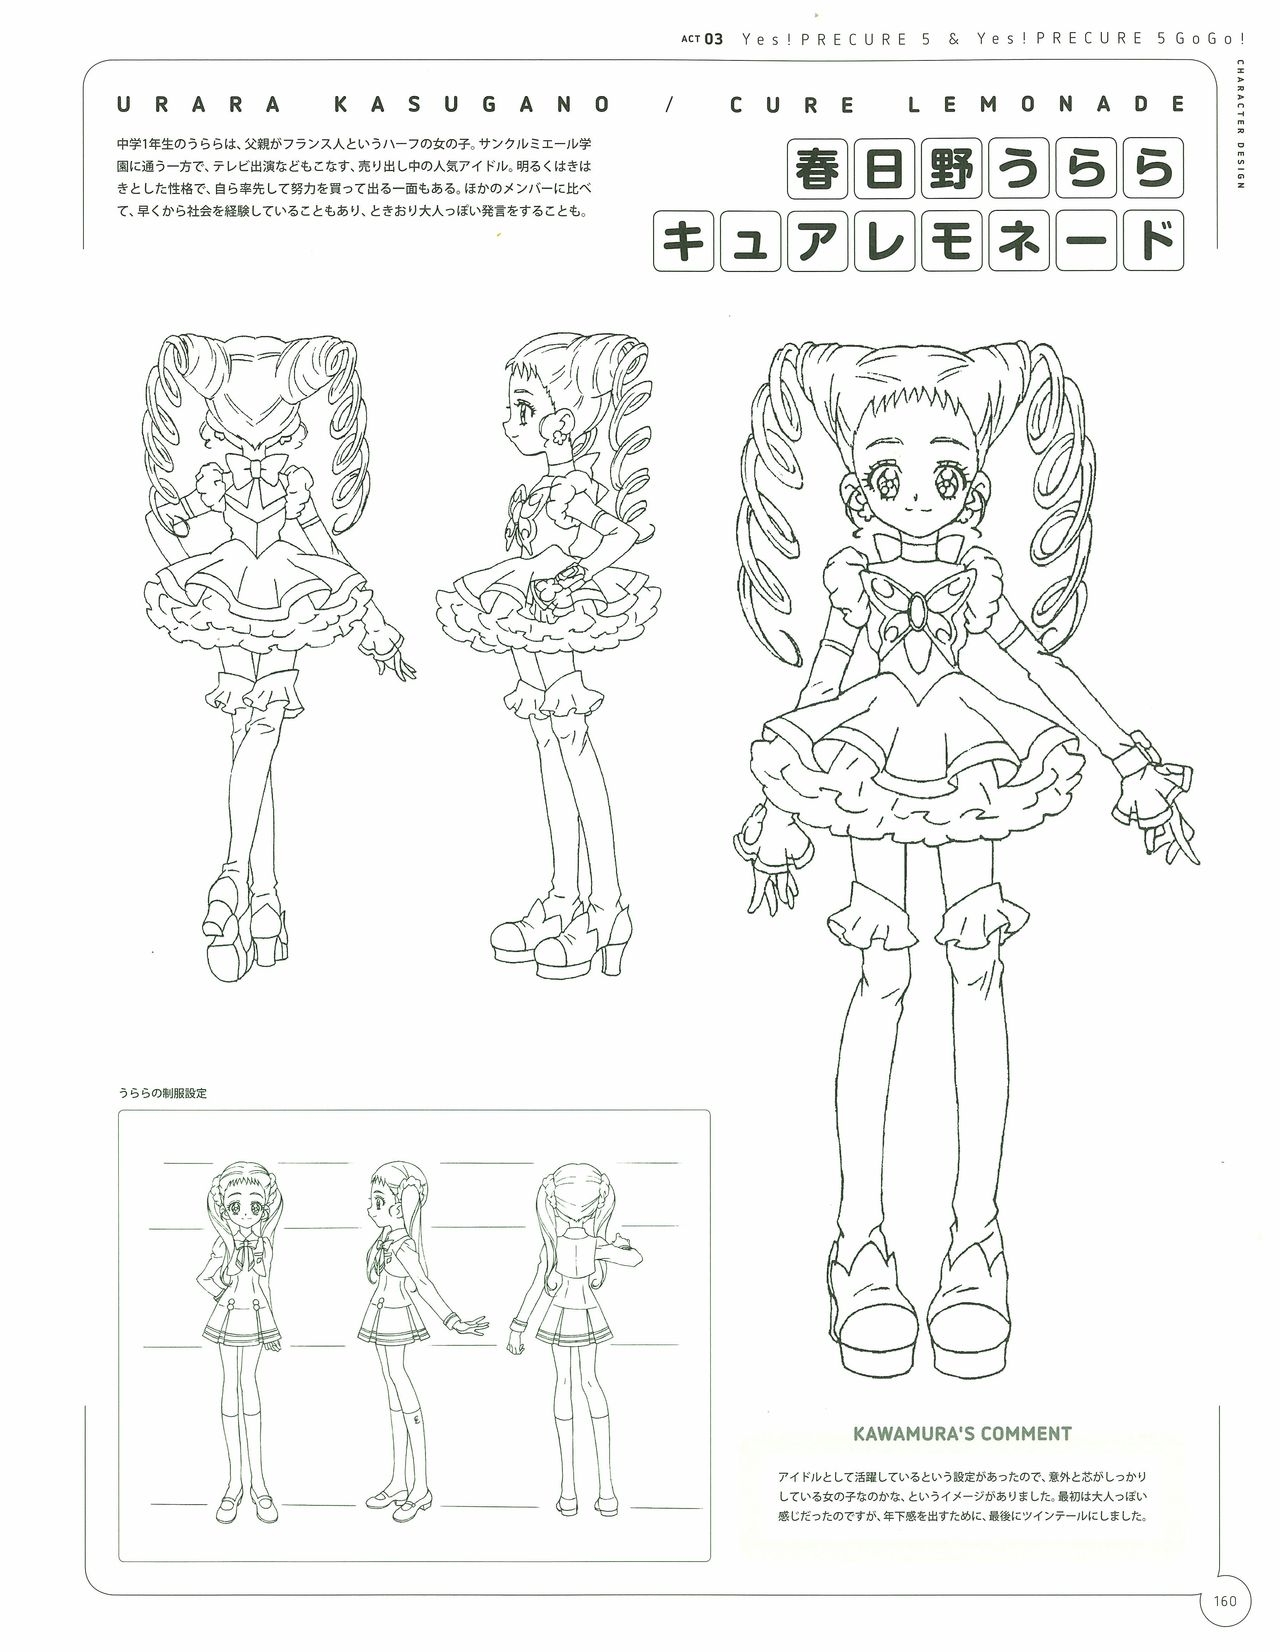 Kawamura Toshie - Toei Animation Precure Works 160